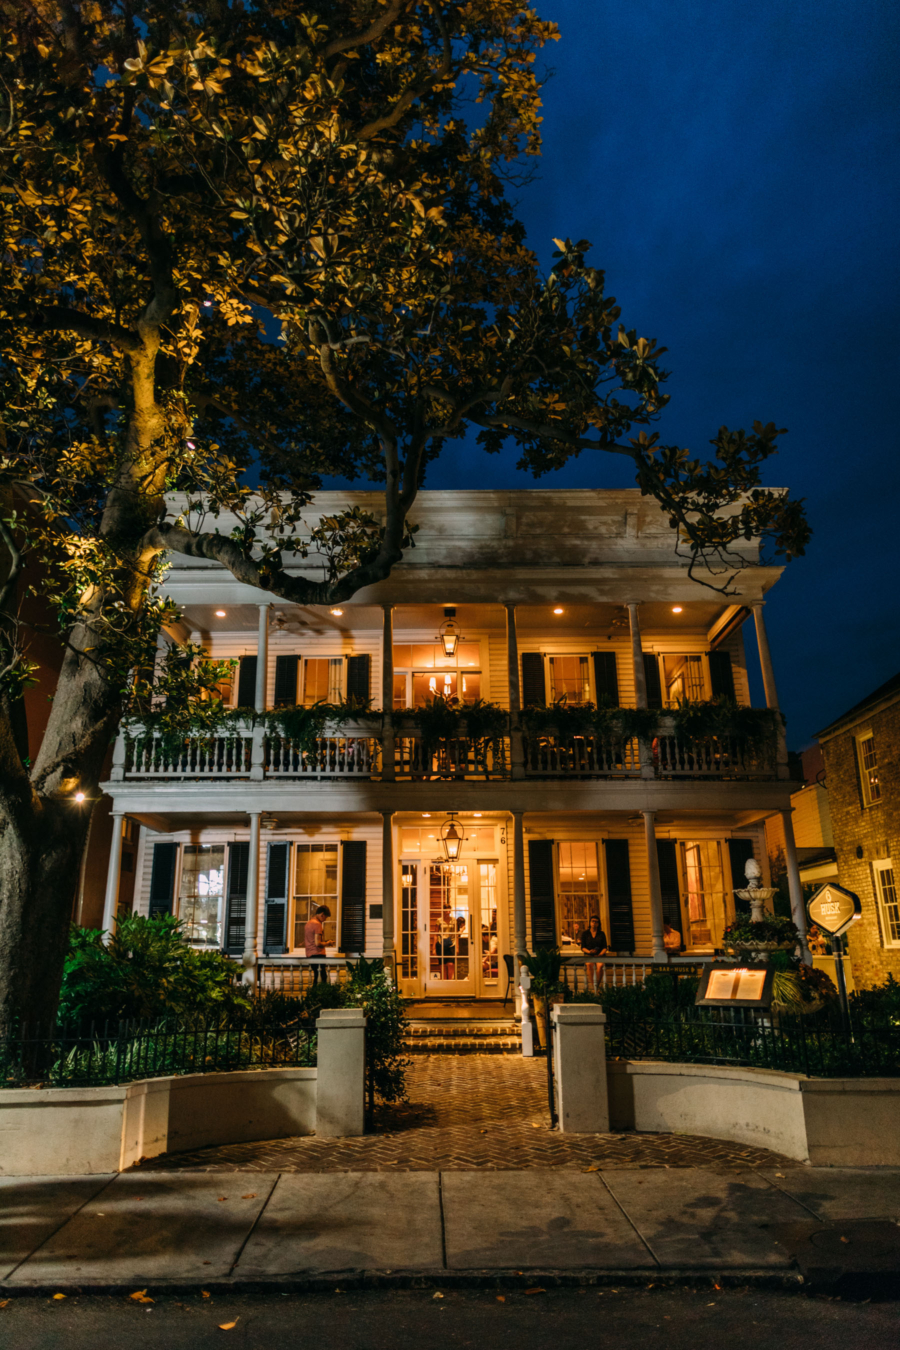 Charleston Homes at Night - Travel Guide: 36 hours in Charleston, SC // NotJessFashion.com